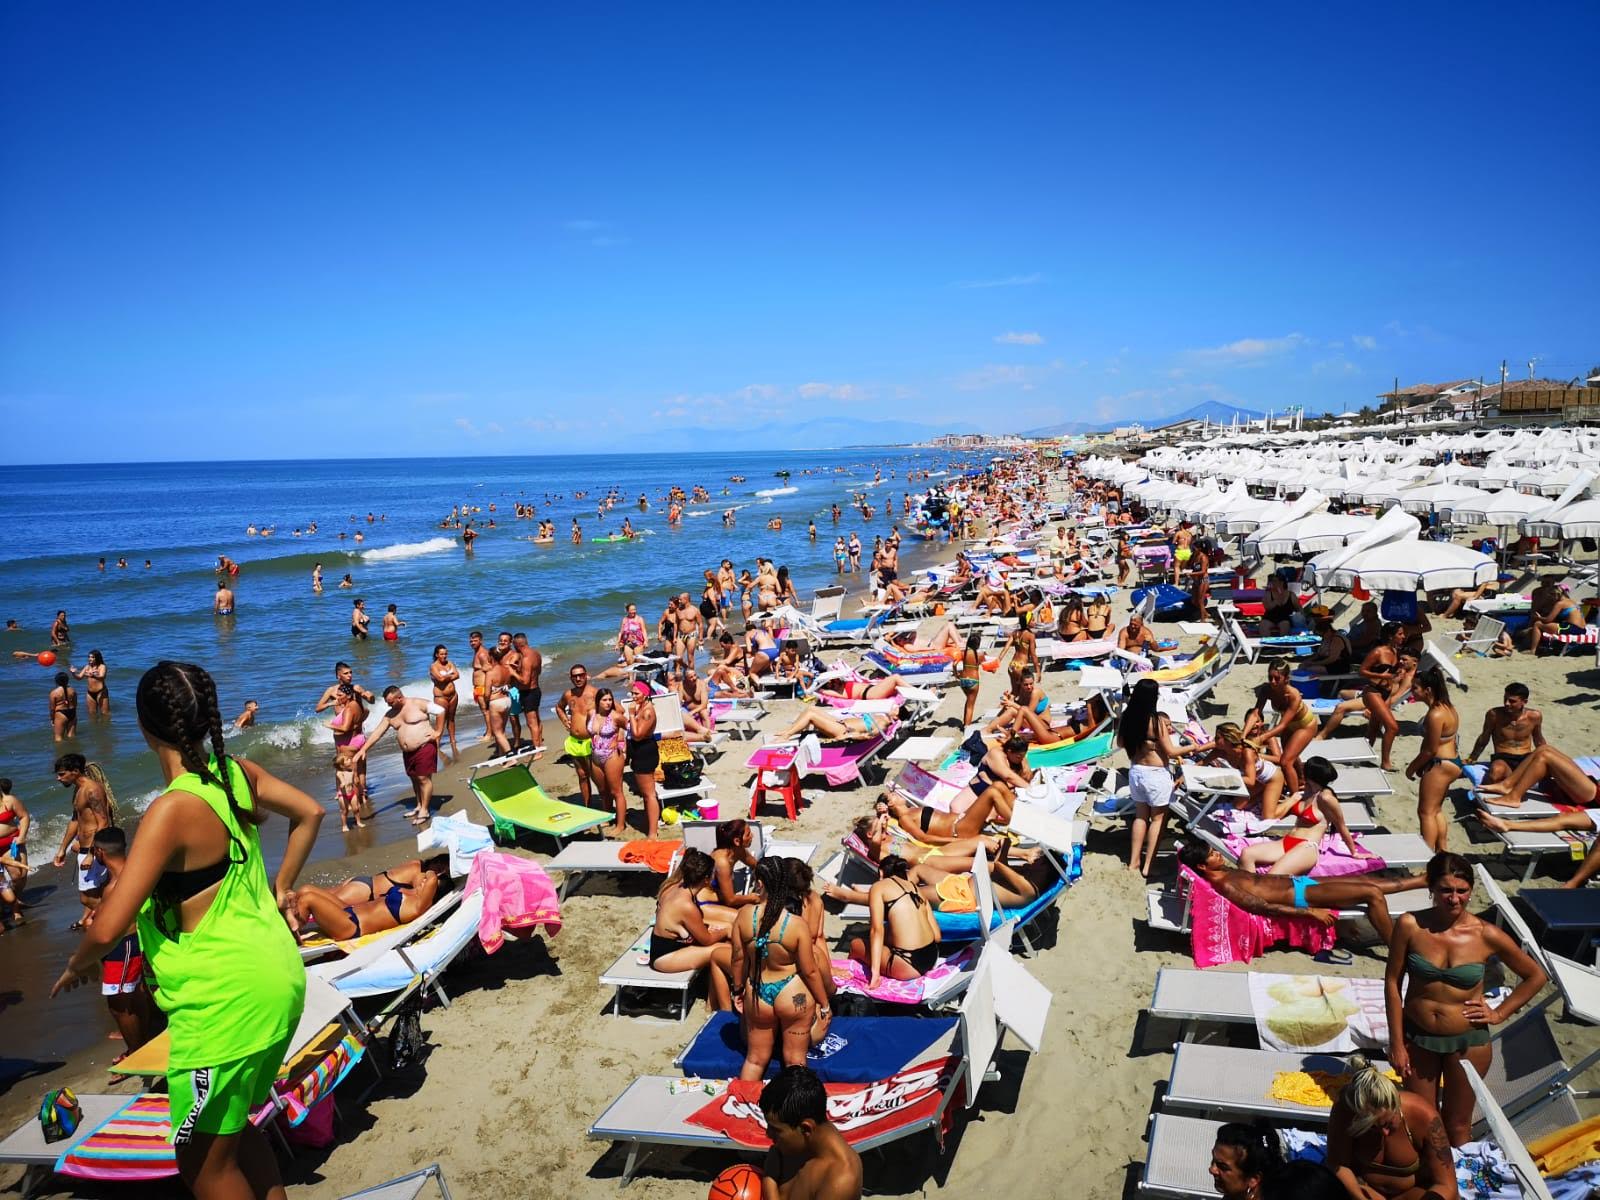 Fotografie cu Ischitella beach - locul popular printre cunoscătorii de relaxare